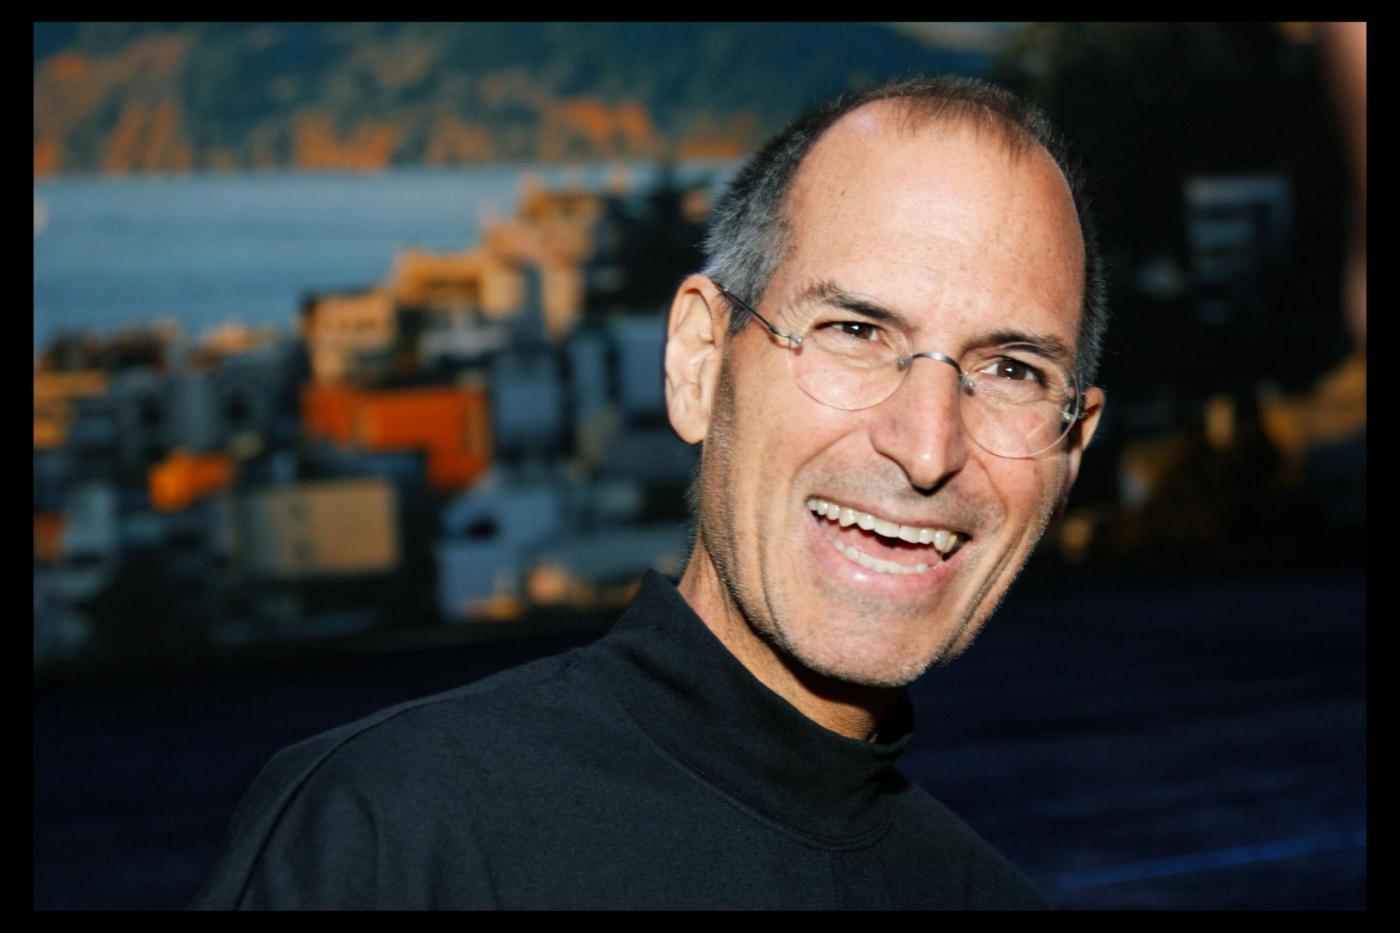 Steve Jobs presents new iPhone generation